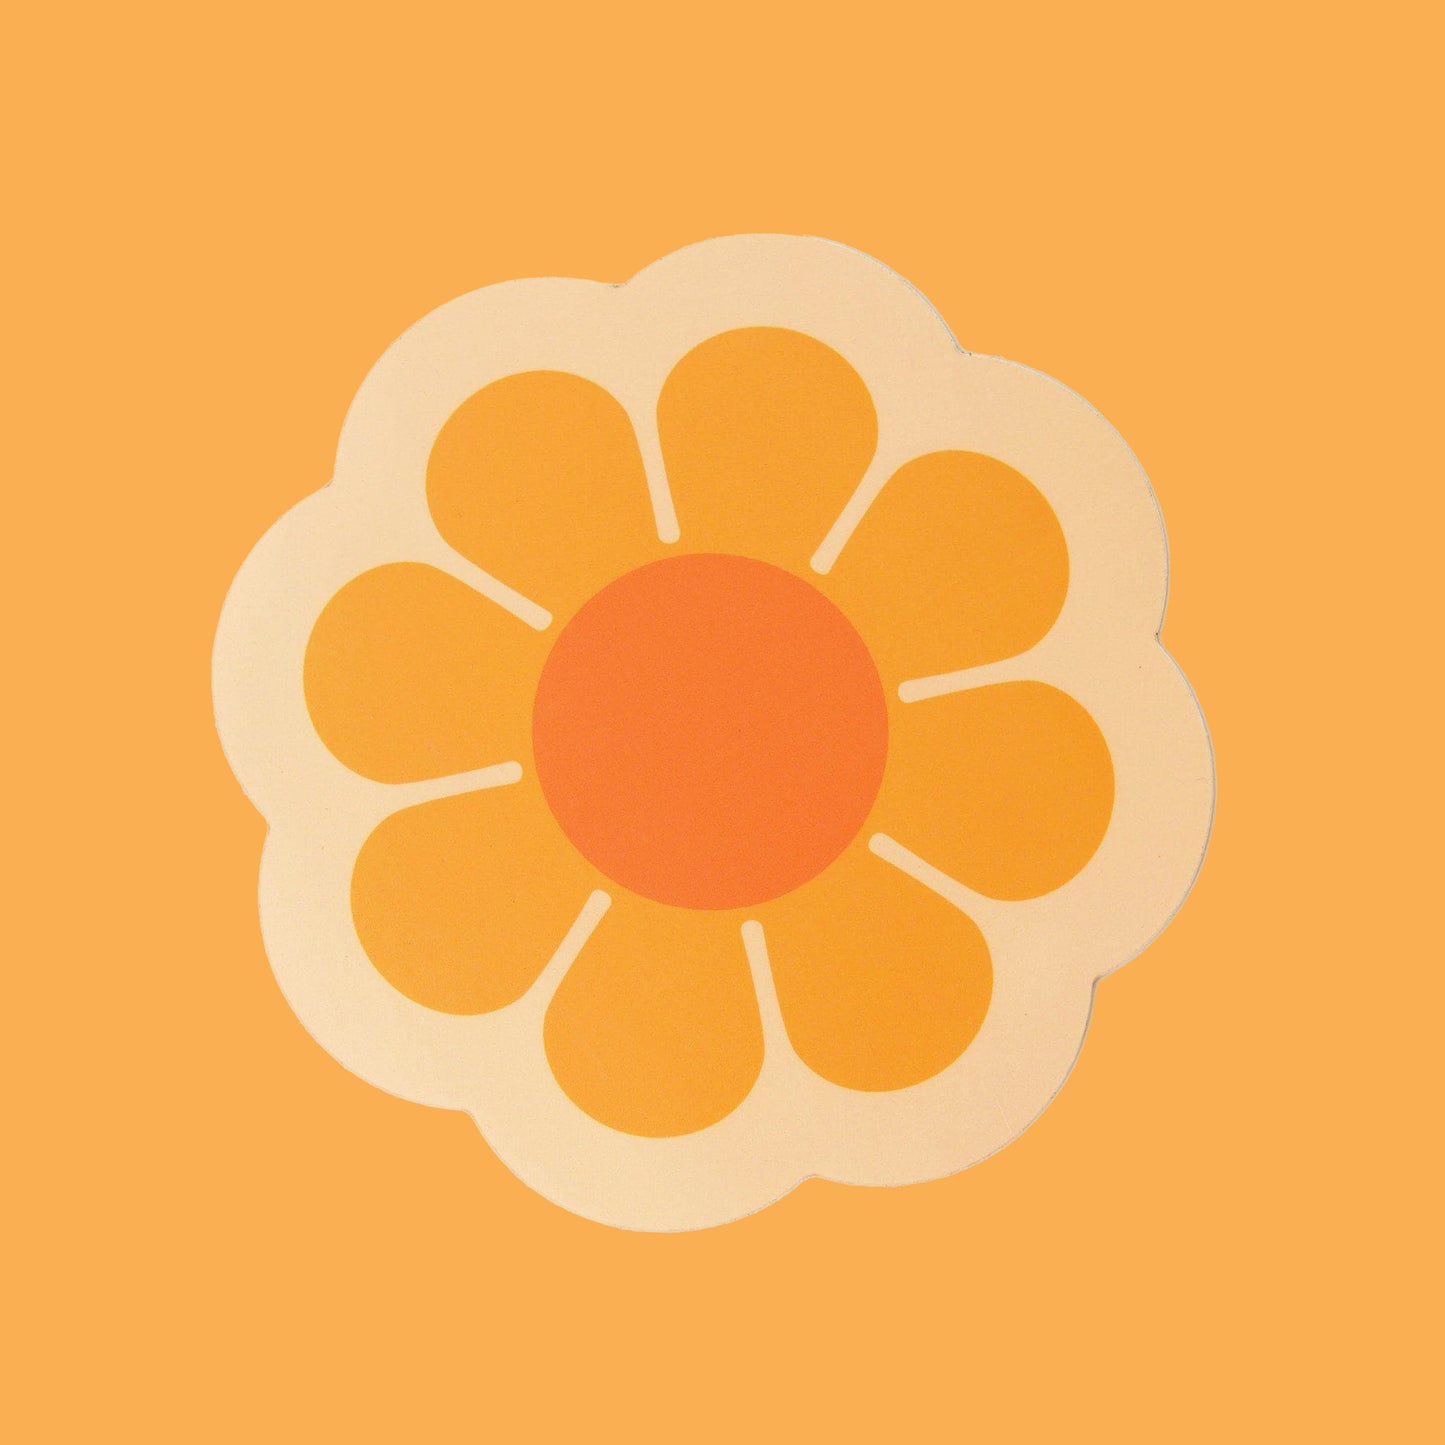 retro syle bus flower sticker in various shades of orange